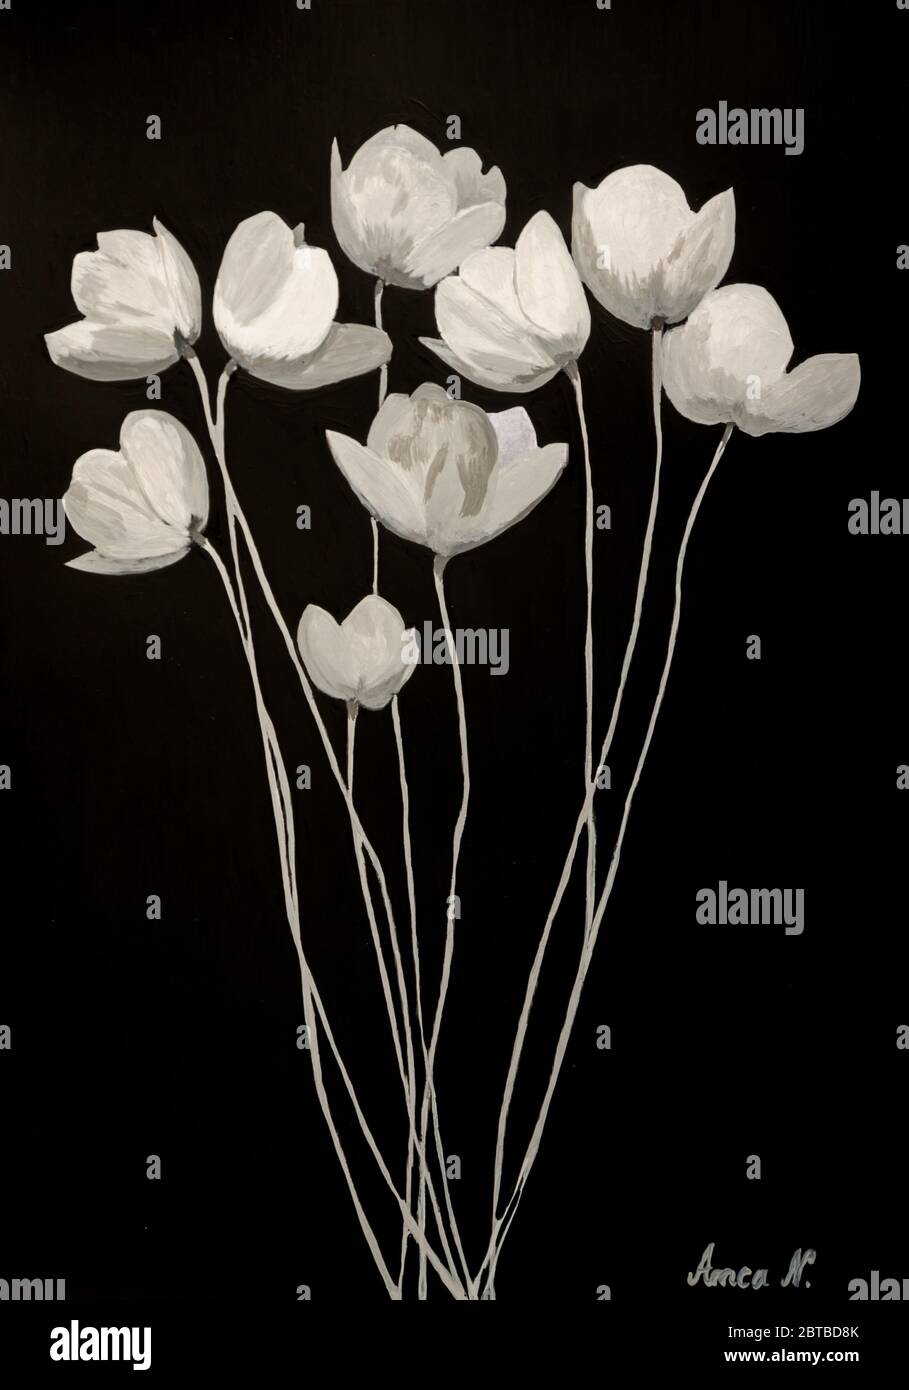 Pinturas de flores fotografías e imágenes de alta resolución - Alamy